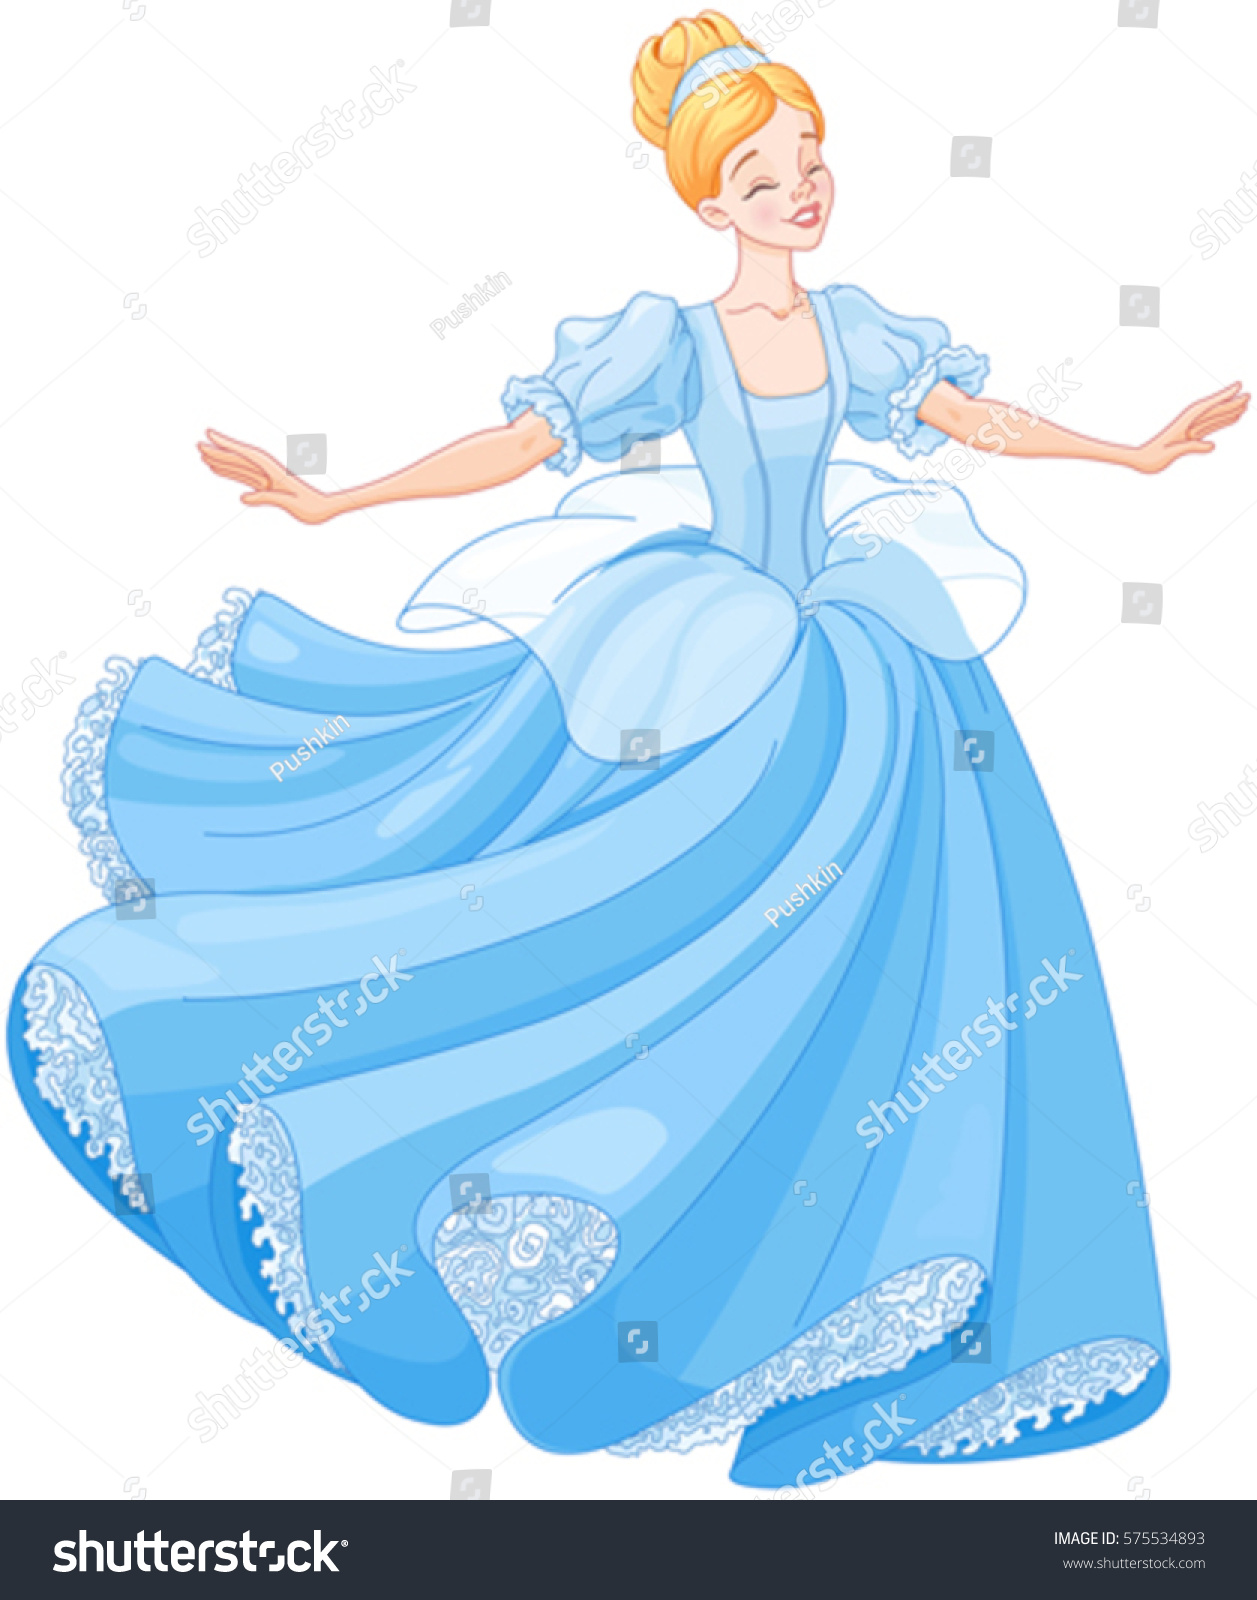 SVG of The royal ball dance of Cinderella  svg